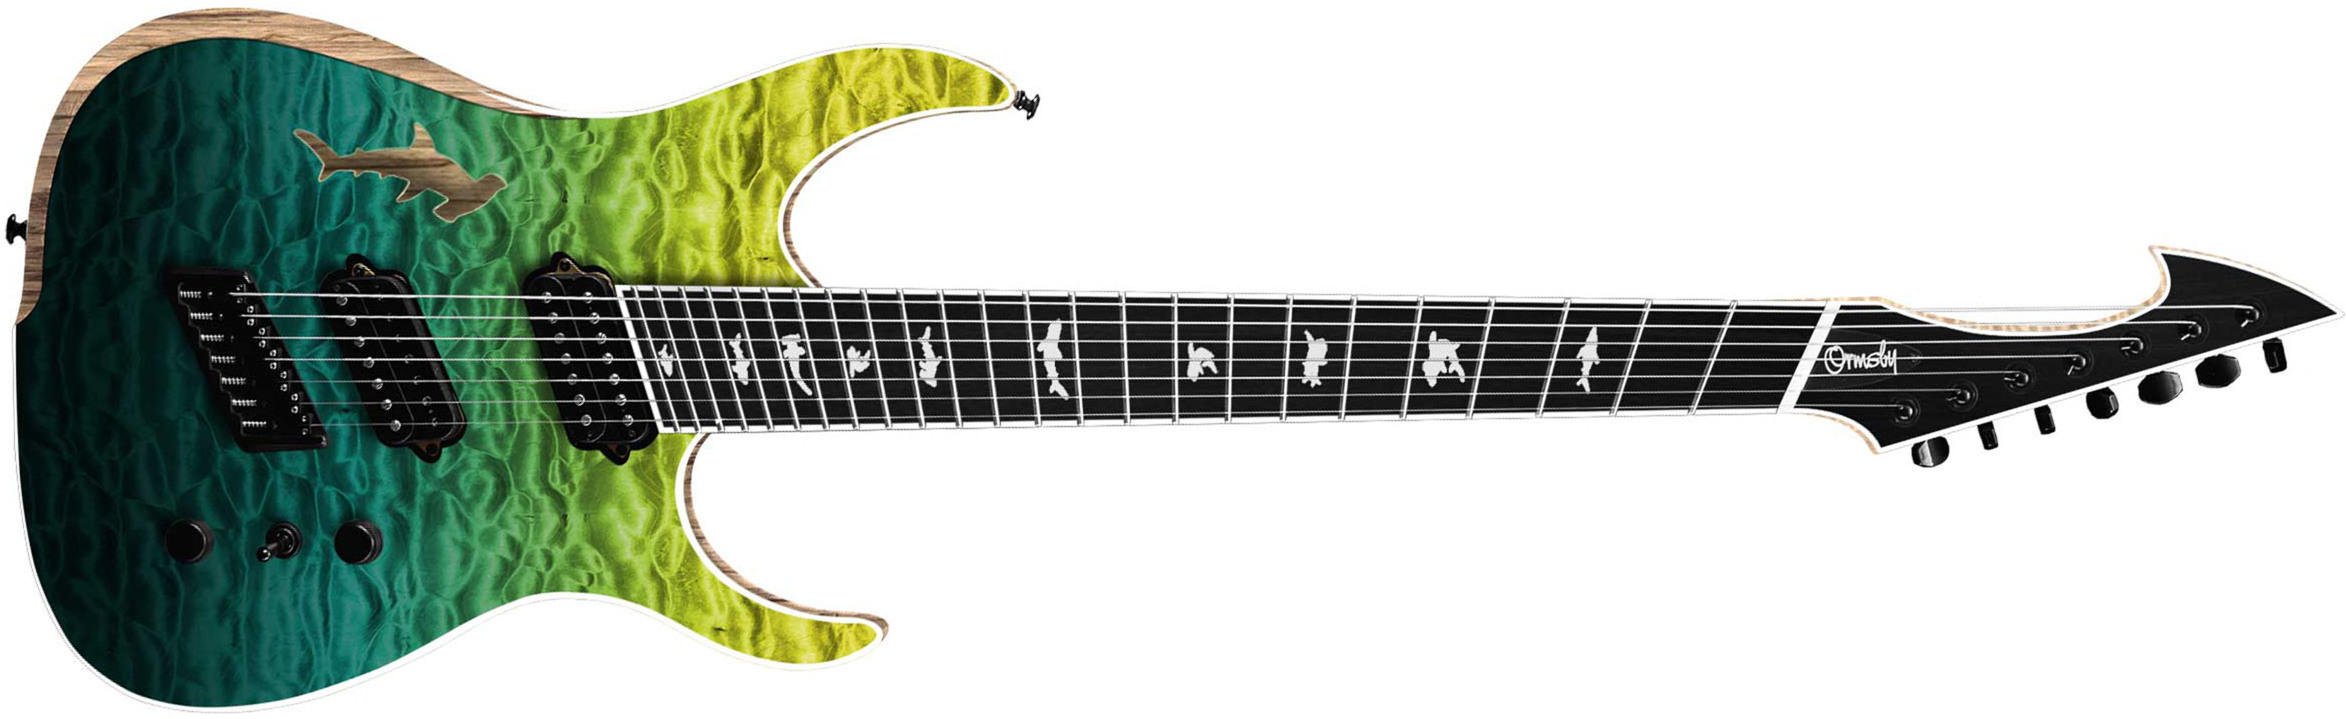 Ormsby Hype Gtr Shark 7c Multiscale 2h Ht Eb - Carribean Blue/green - Multi-scale gitaar - Main picture